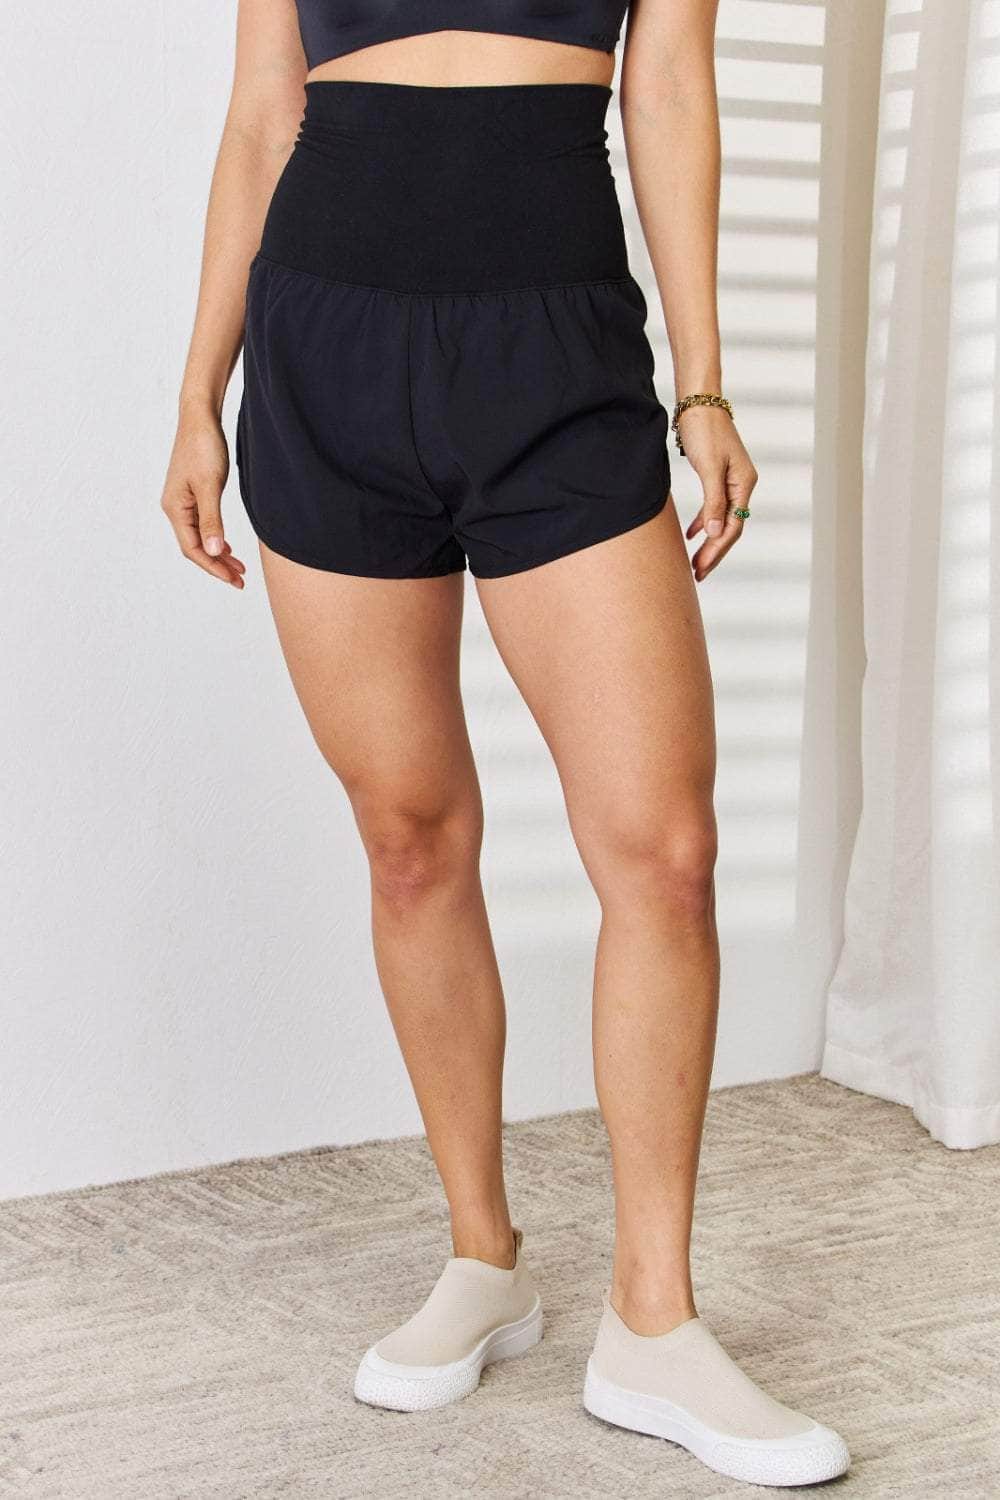 Zenana Full Size High Waist Tummy Control Shorts Black / S